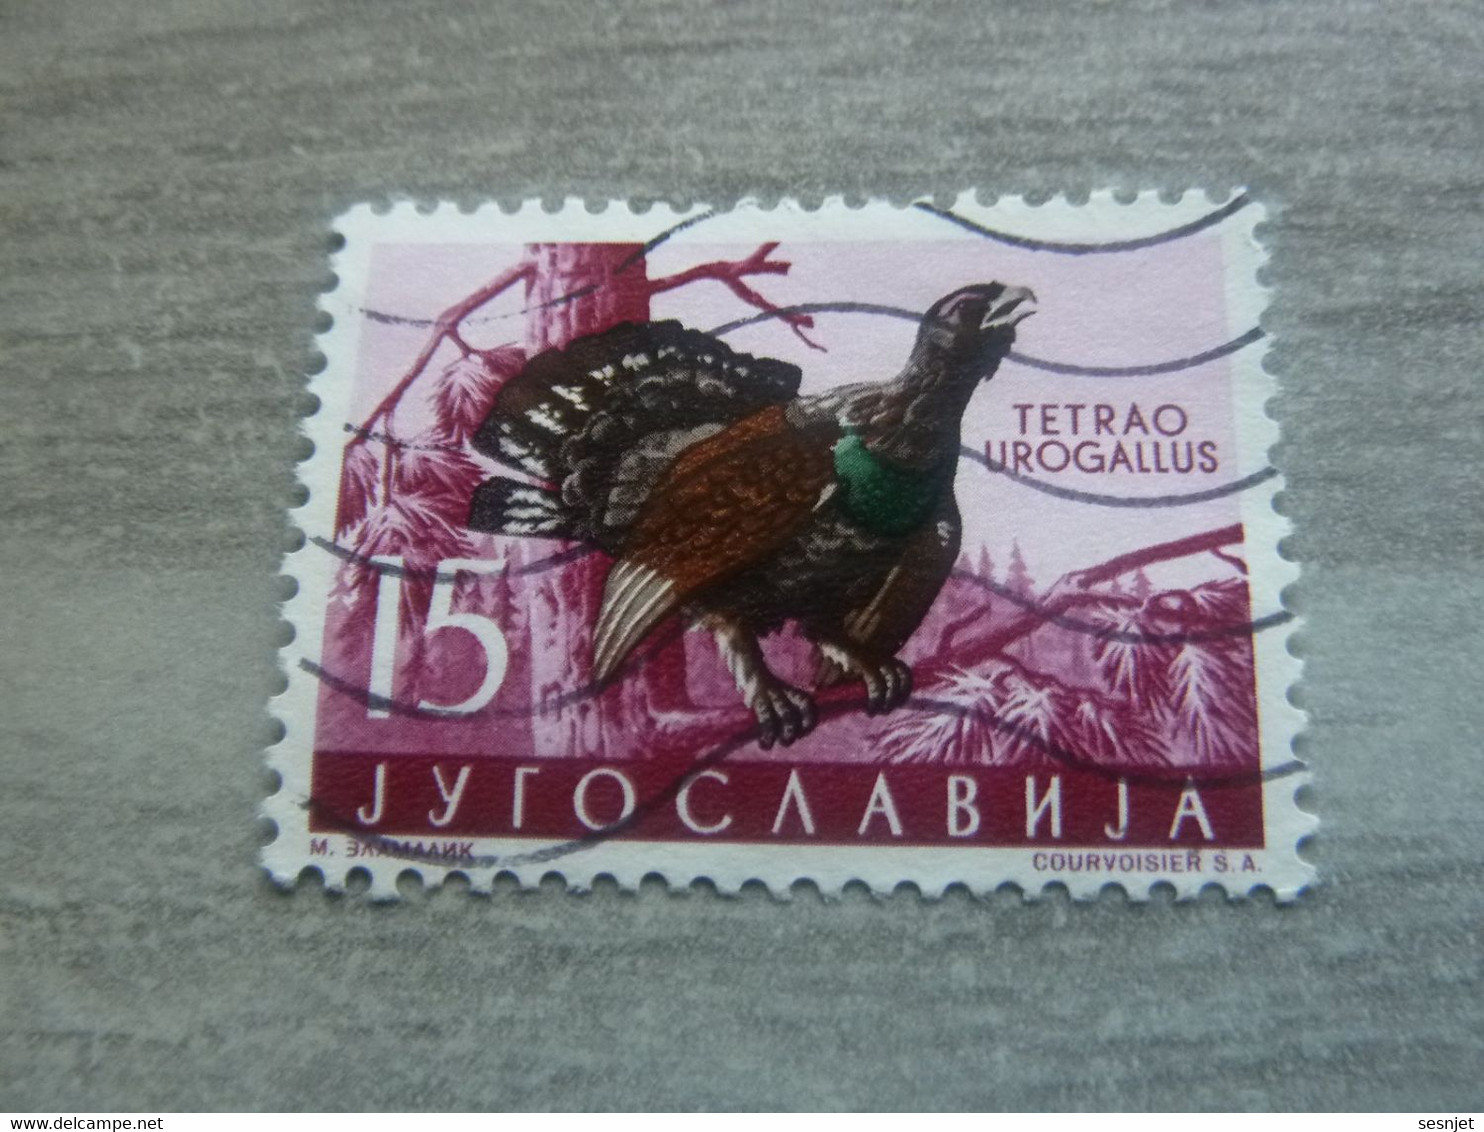 Jyrocaabhja - Tetrao Urogallus - Courvoisier - Val 15 - Multicolore - Oblitéré - Année 1971 - - Used Stamps